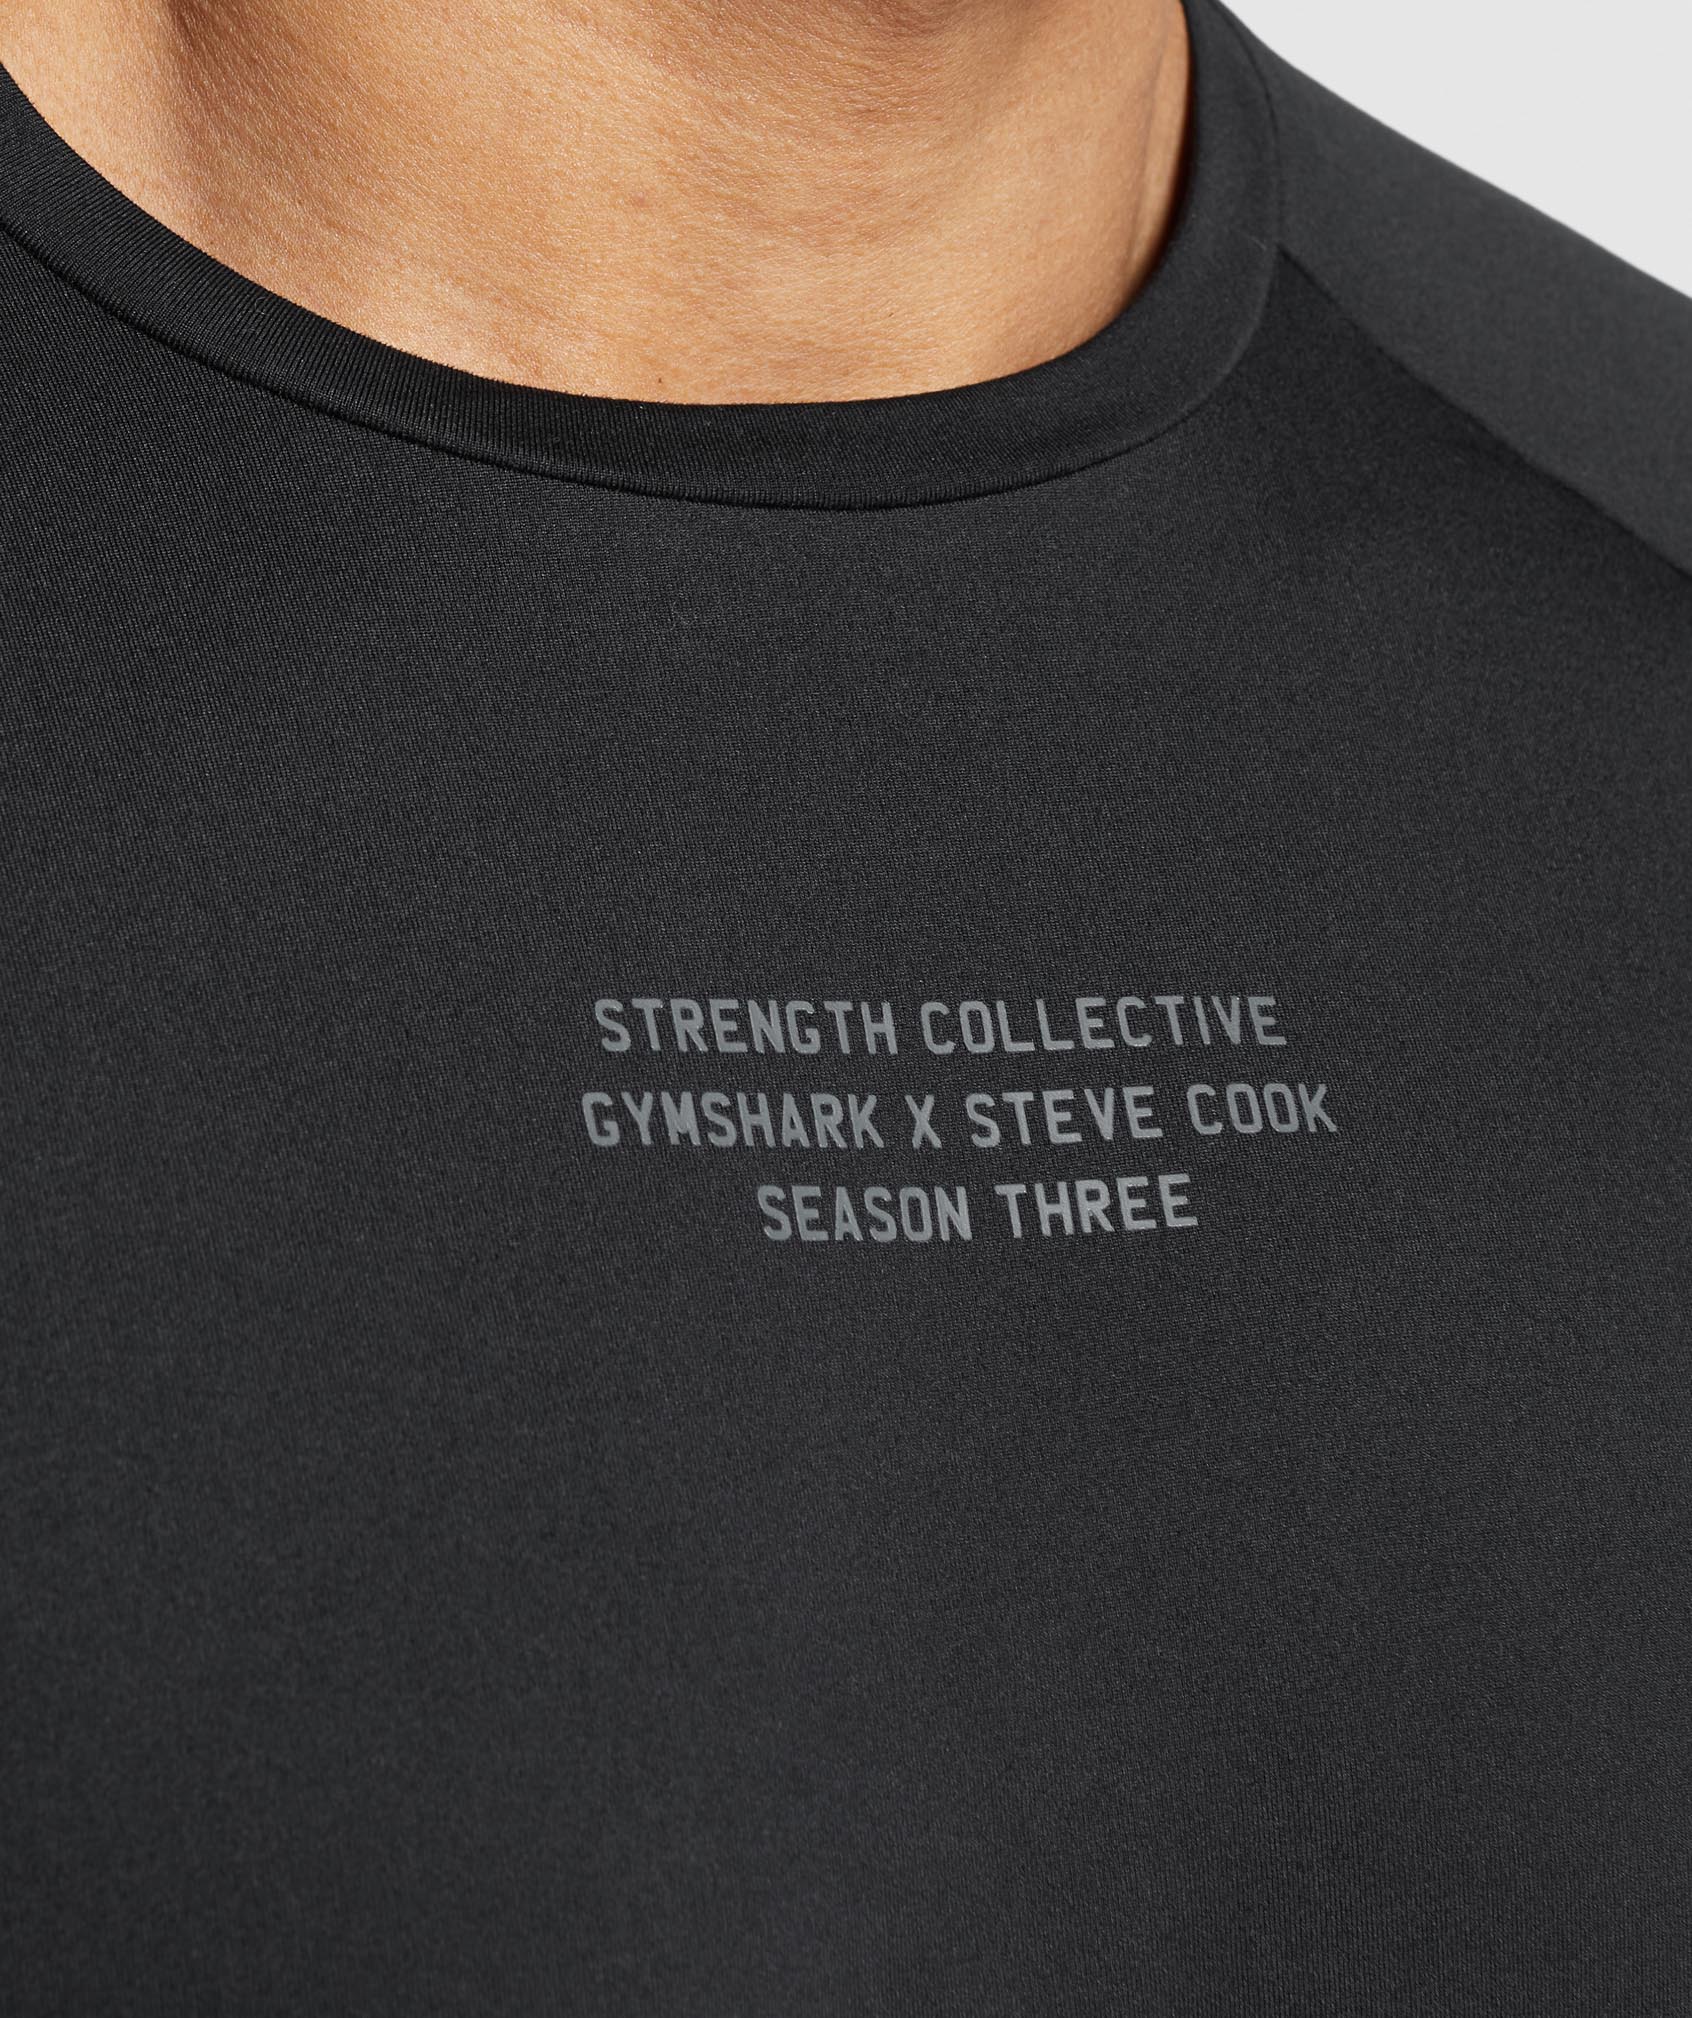 Gymshark//Steve Cook T-Shirt in Black - view 6